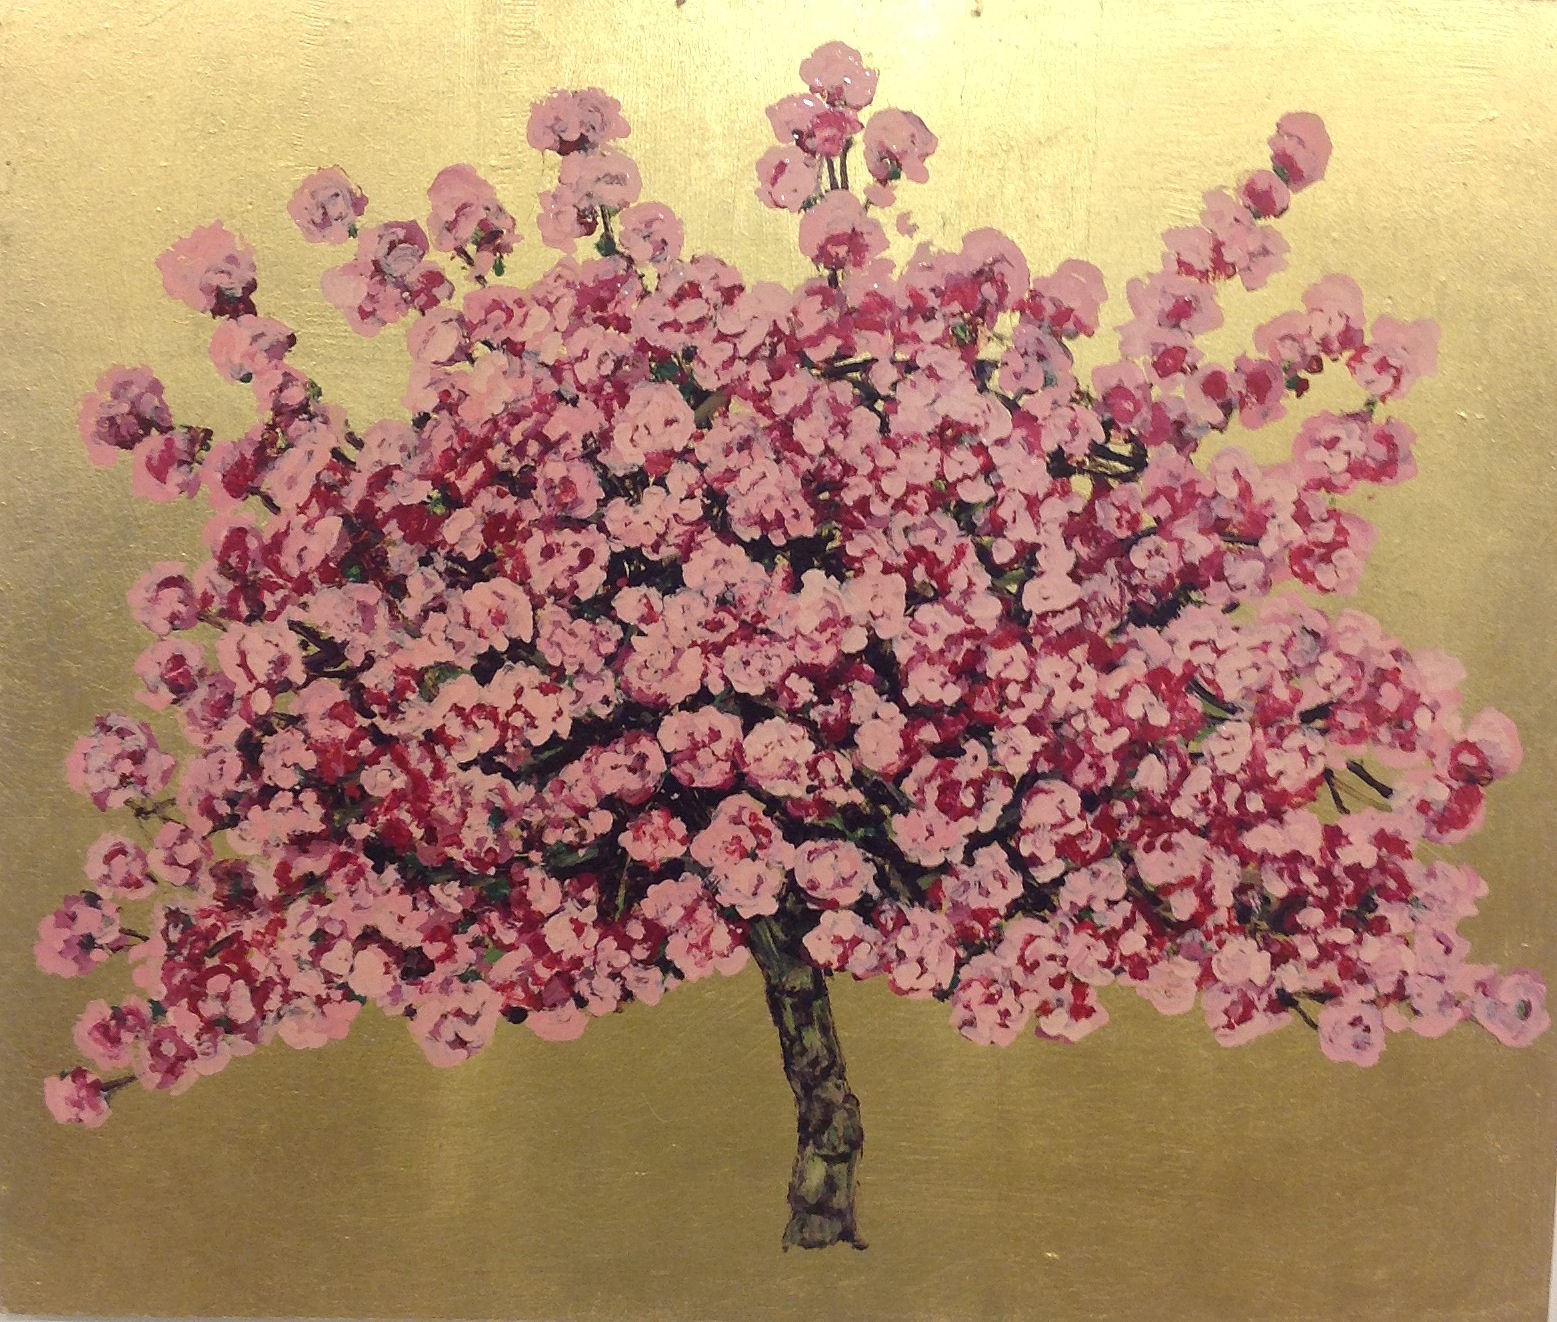 'Gold Blossom' by artist Jack Frame